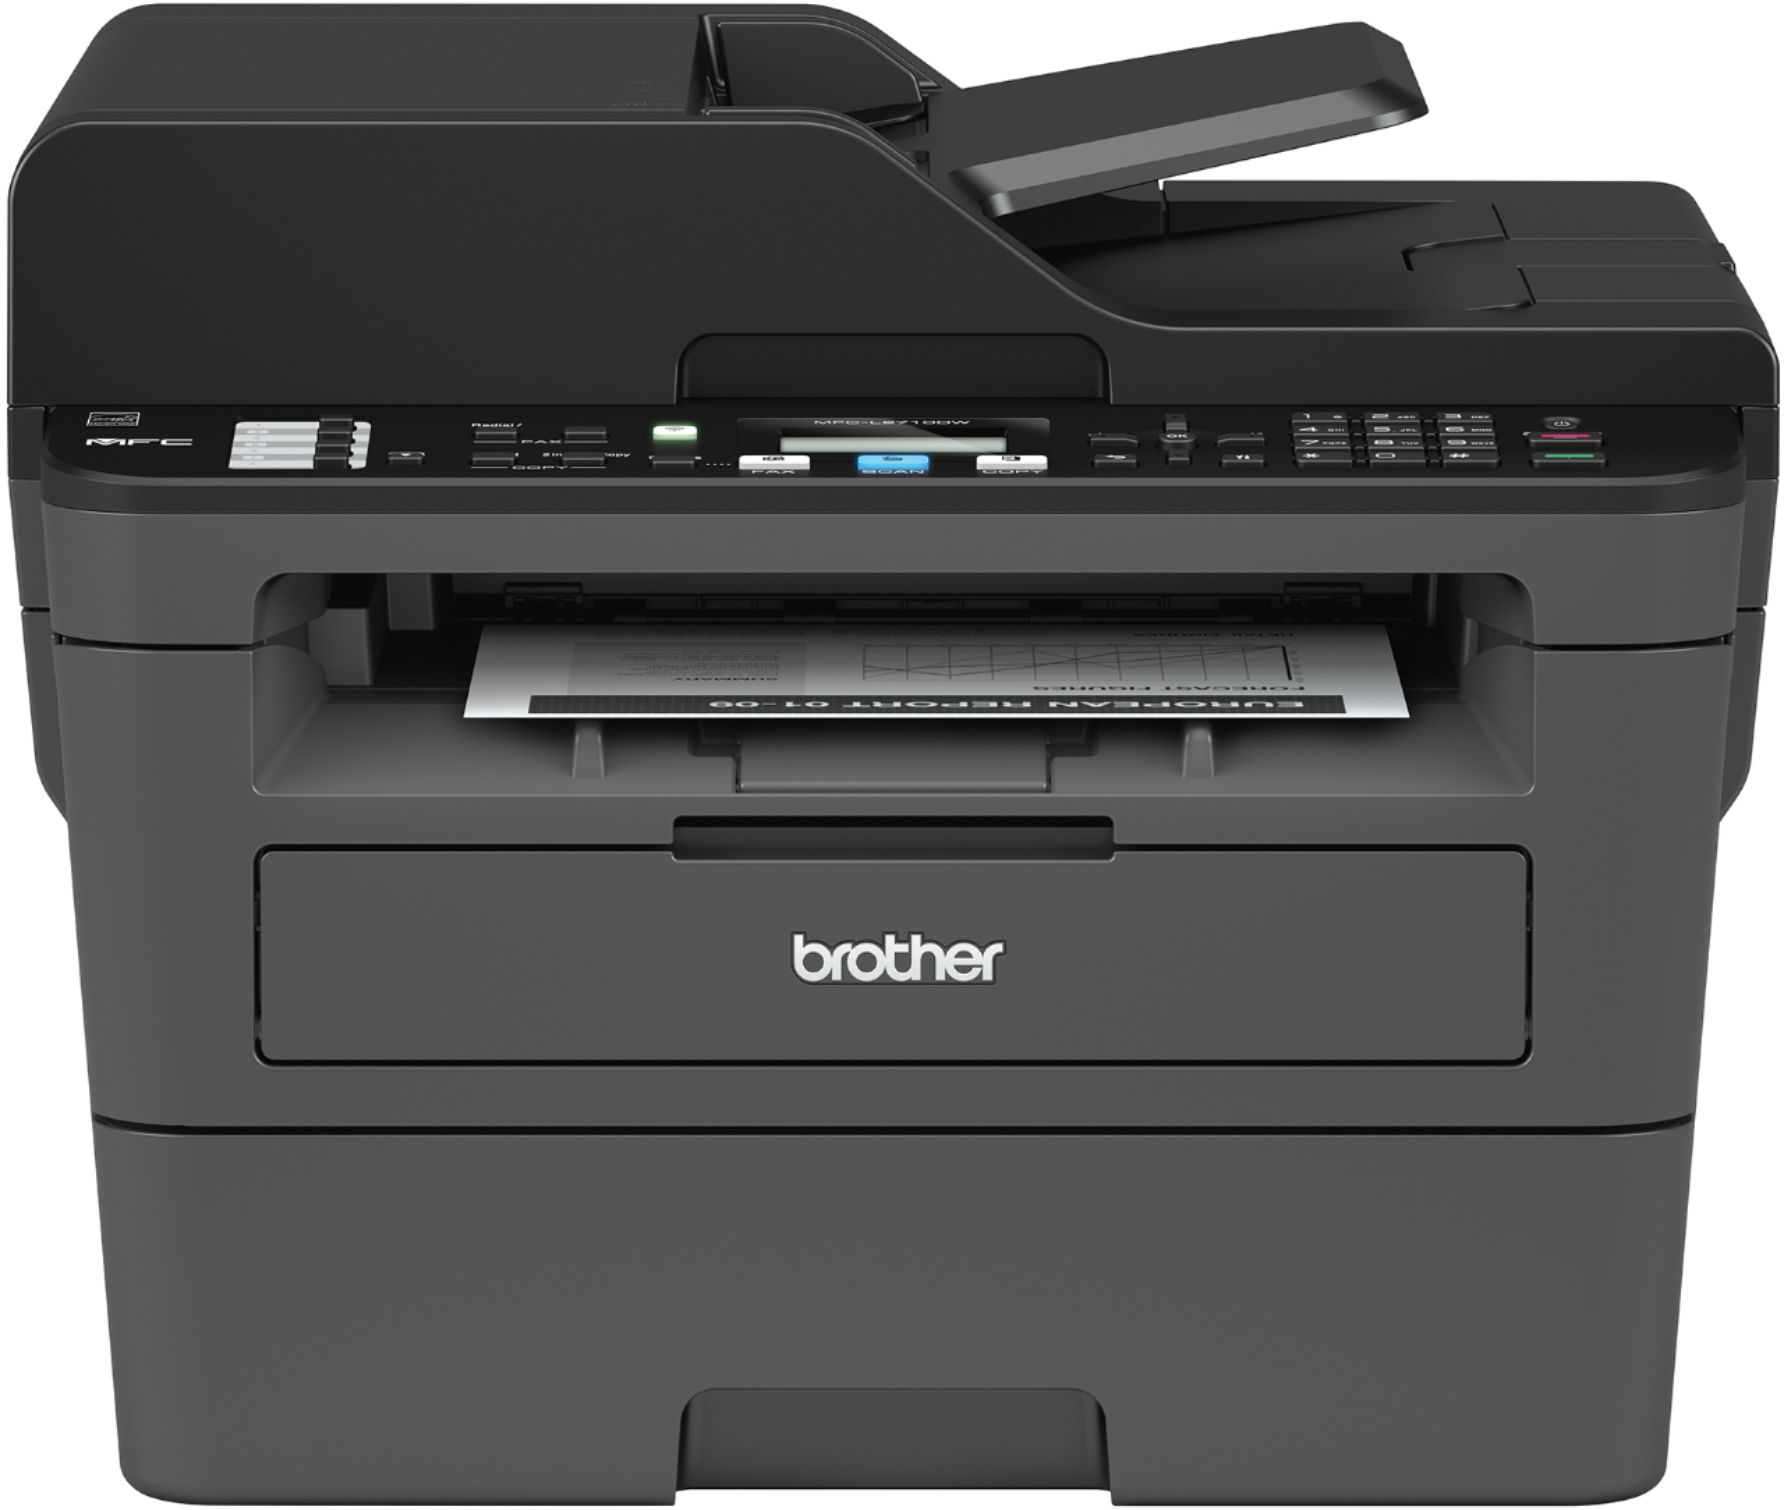 Brother MFC-L2710DW Monochrome Laser Printer